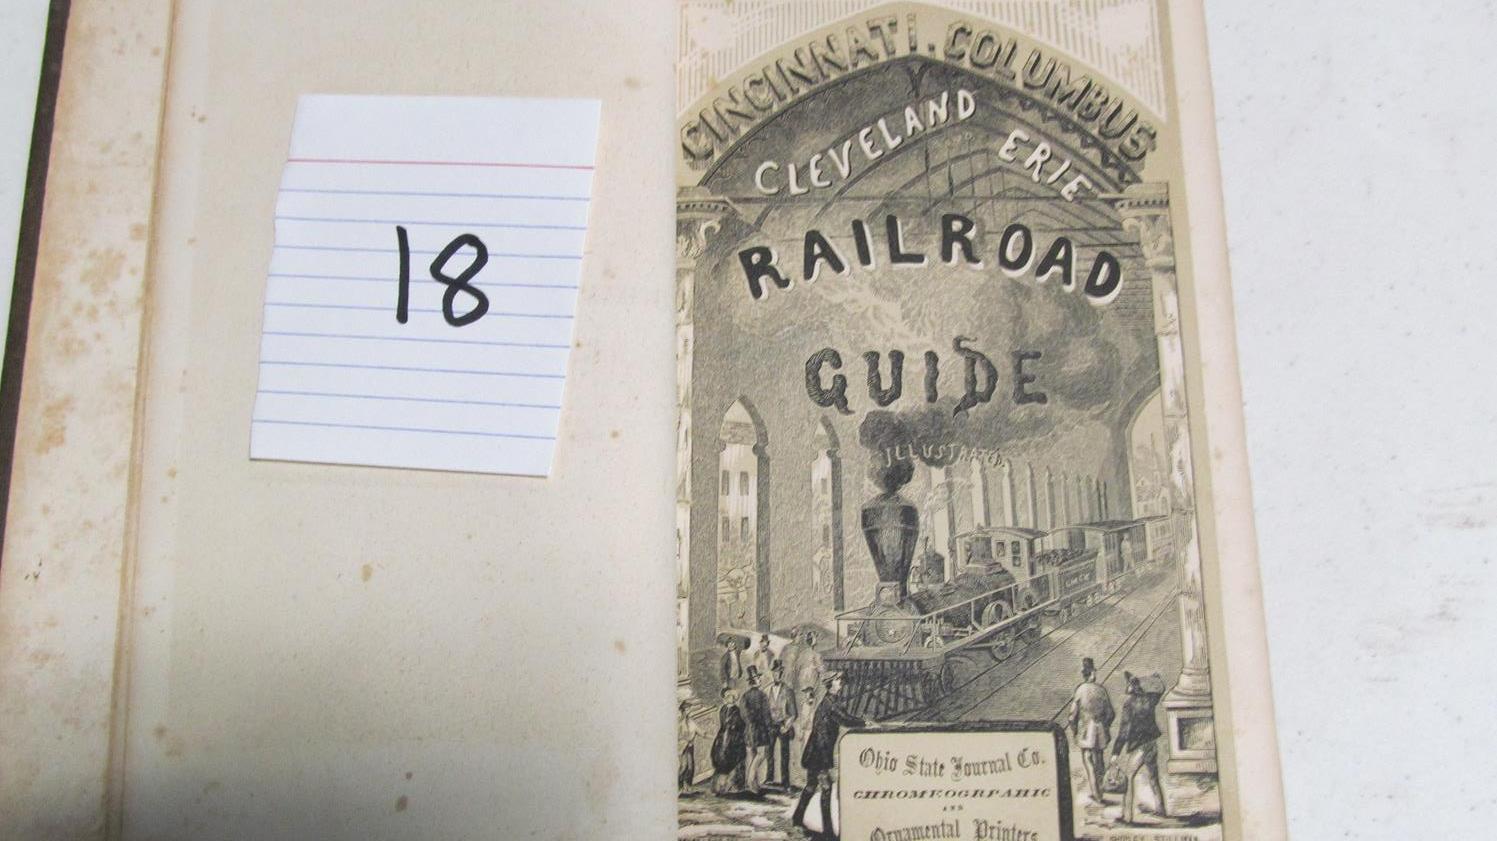 The Cincinnati, Columbus, Cleveland, And Erie Railroad Guide, 1854, Columbus Ohio State Journal Comp